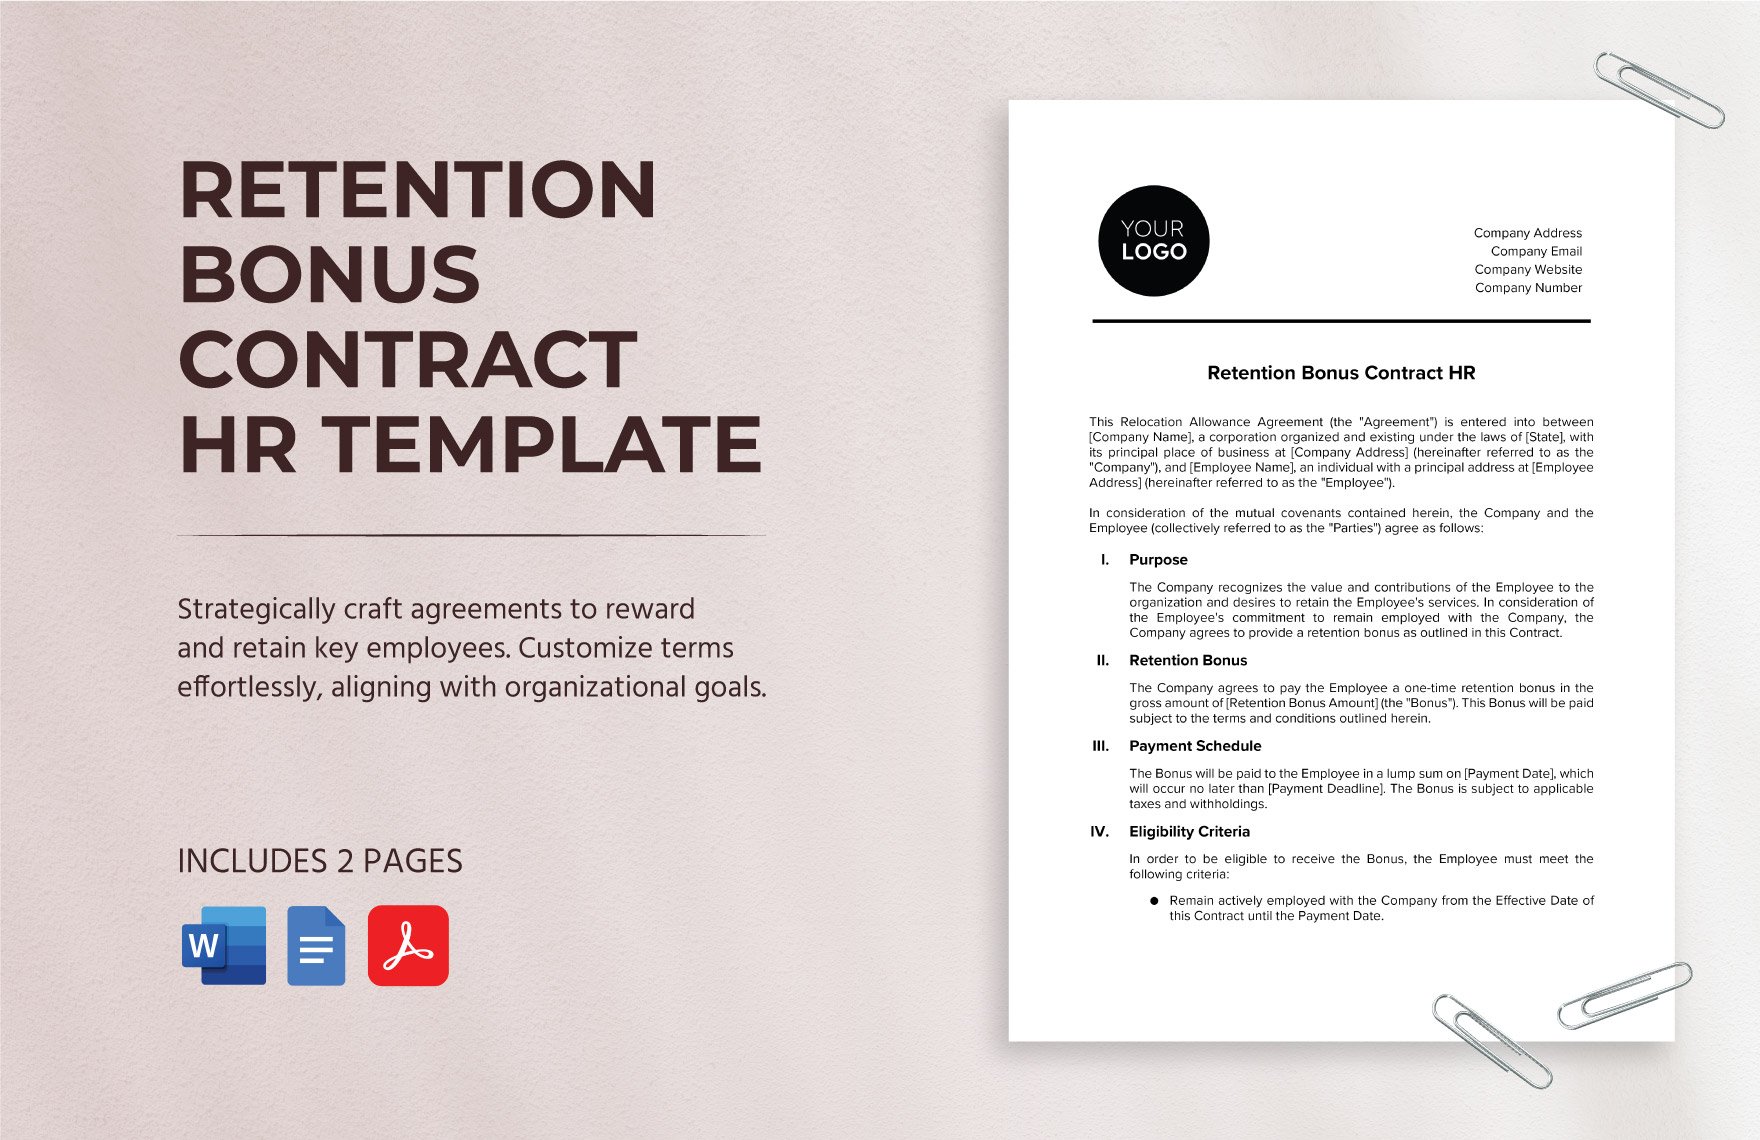 Retention Bonus Contract HR Template in Word, Google Docs, PDF